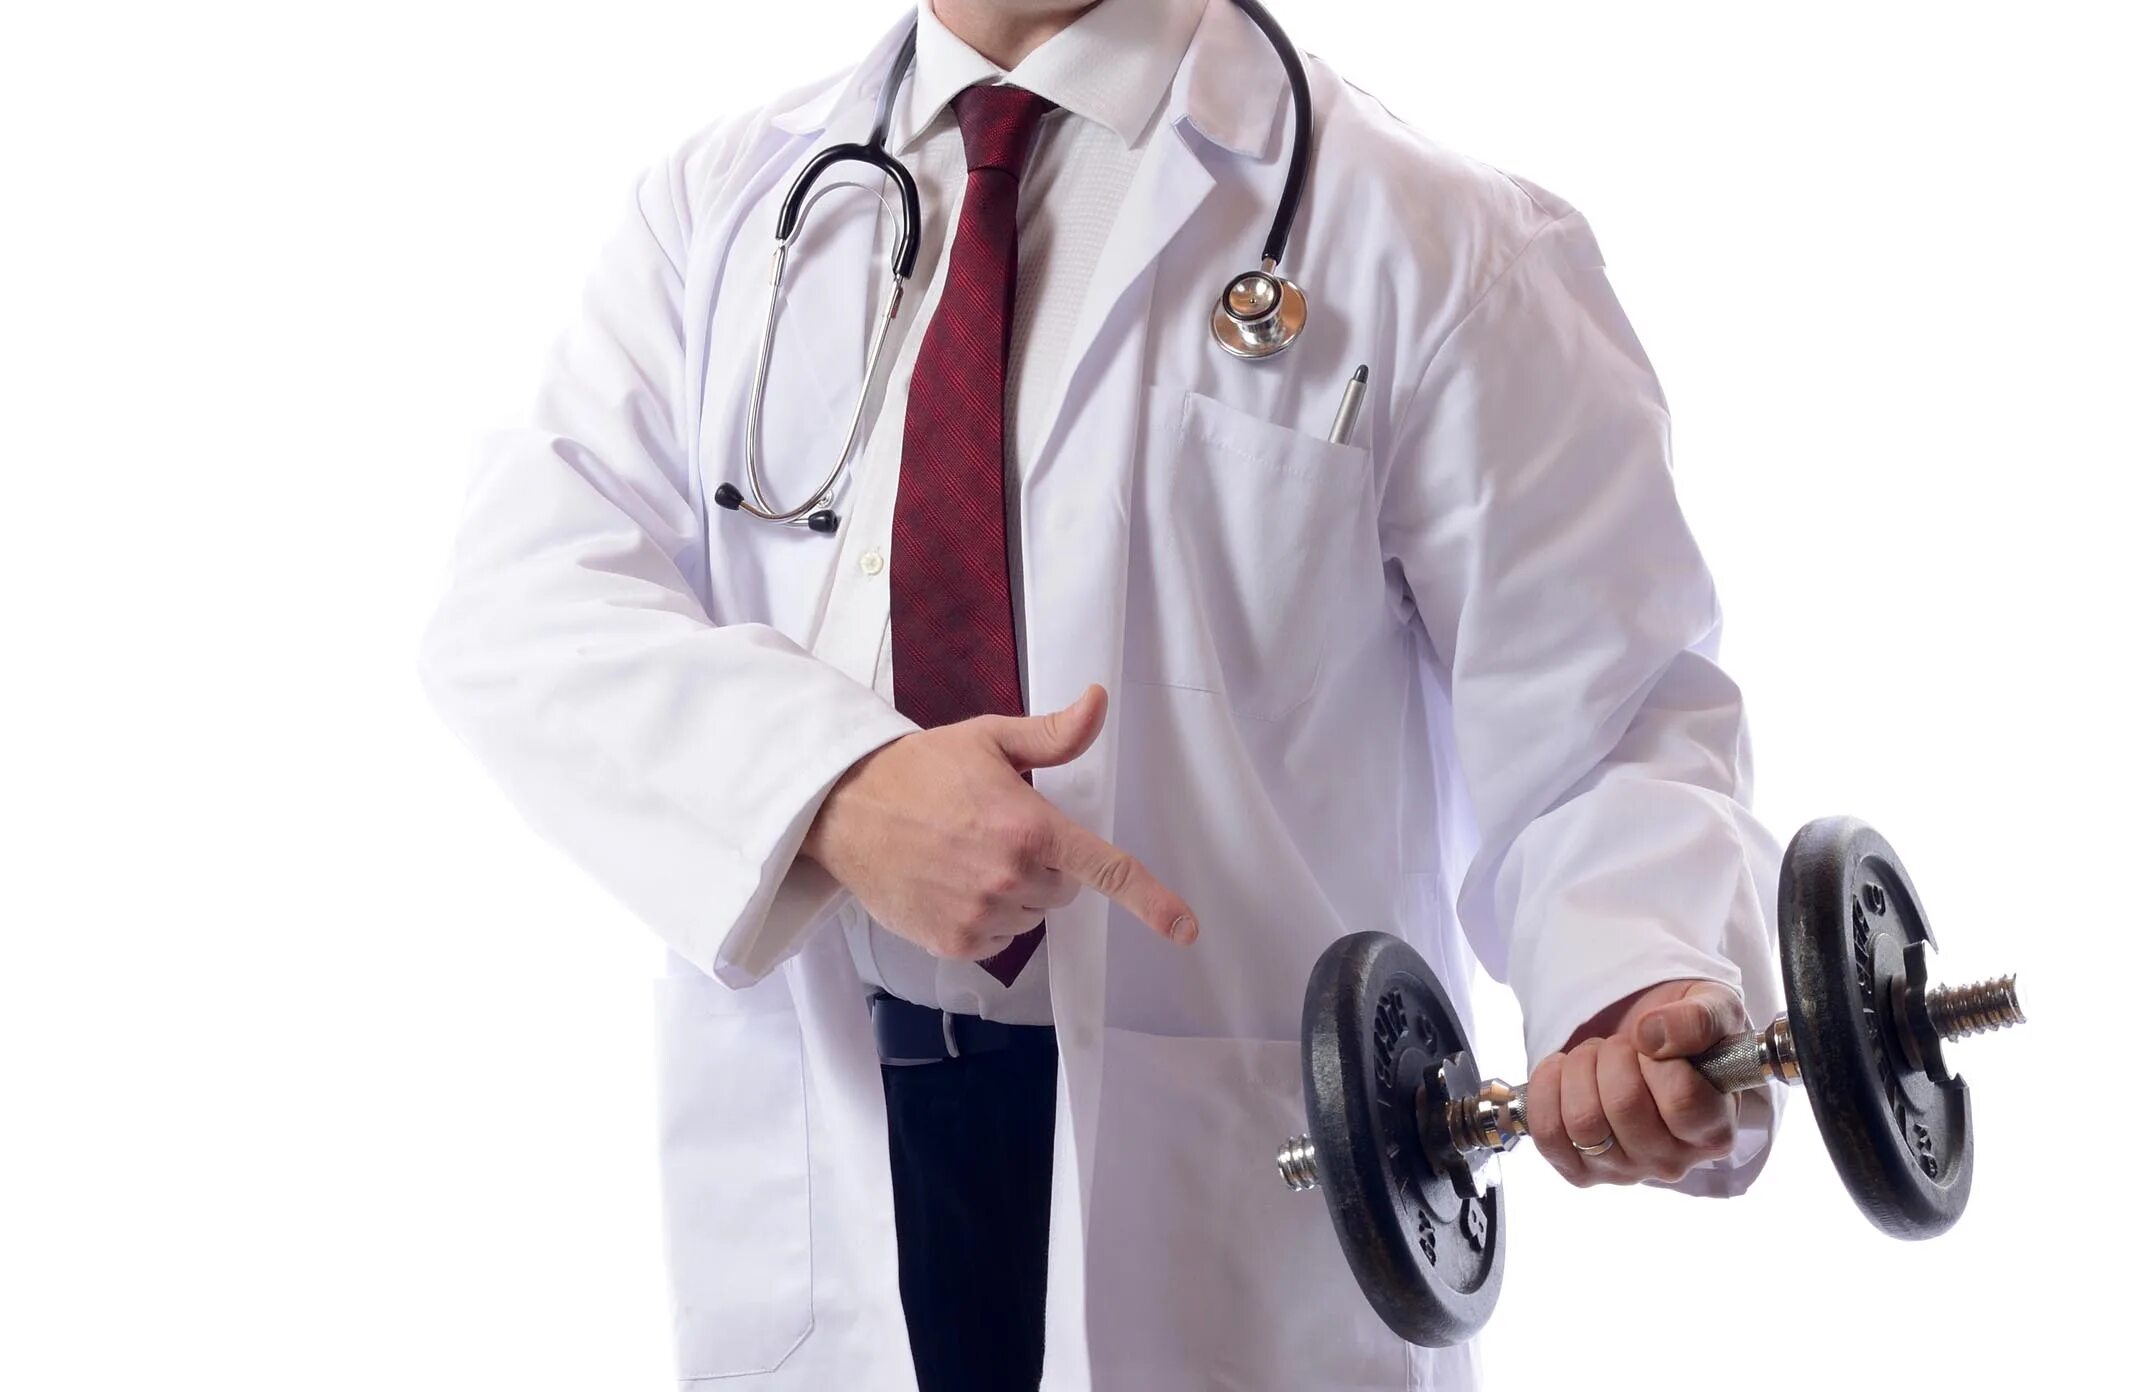 Спорт врач. Медик спортсмен. Доктор и спортсмен. Тренер и врач.